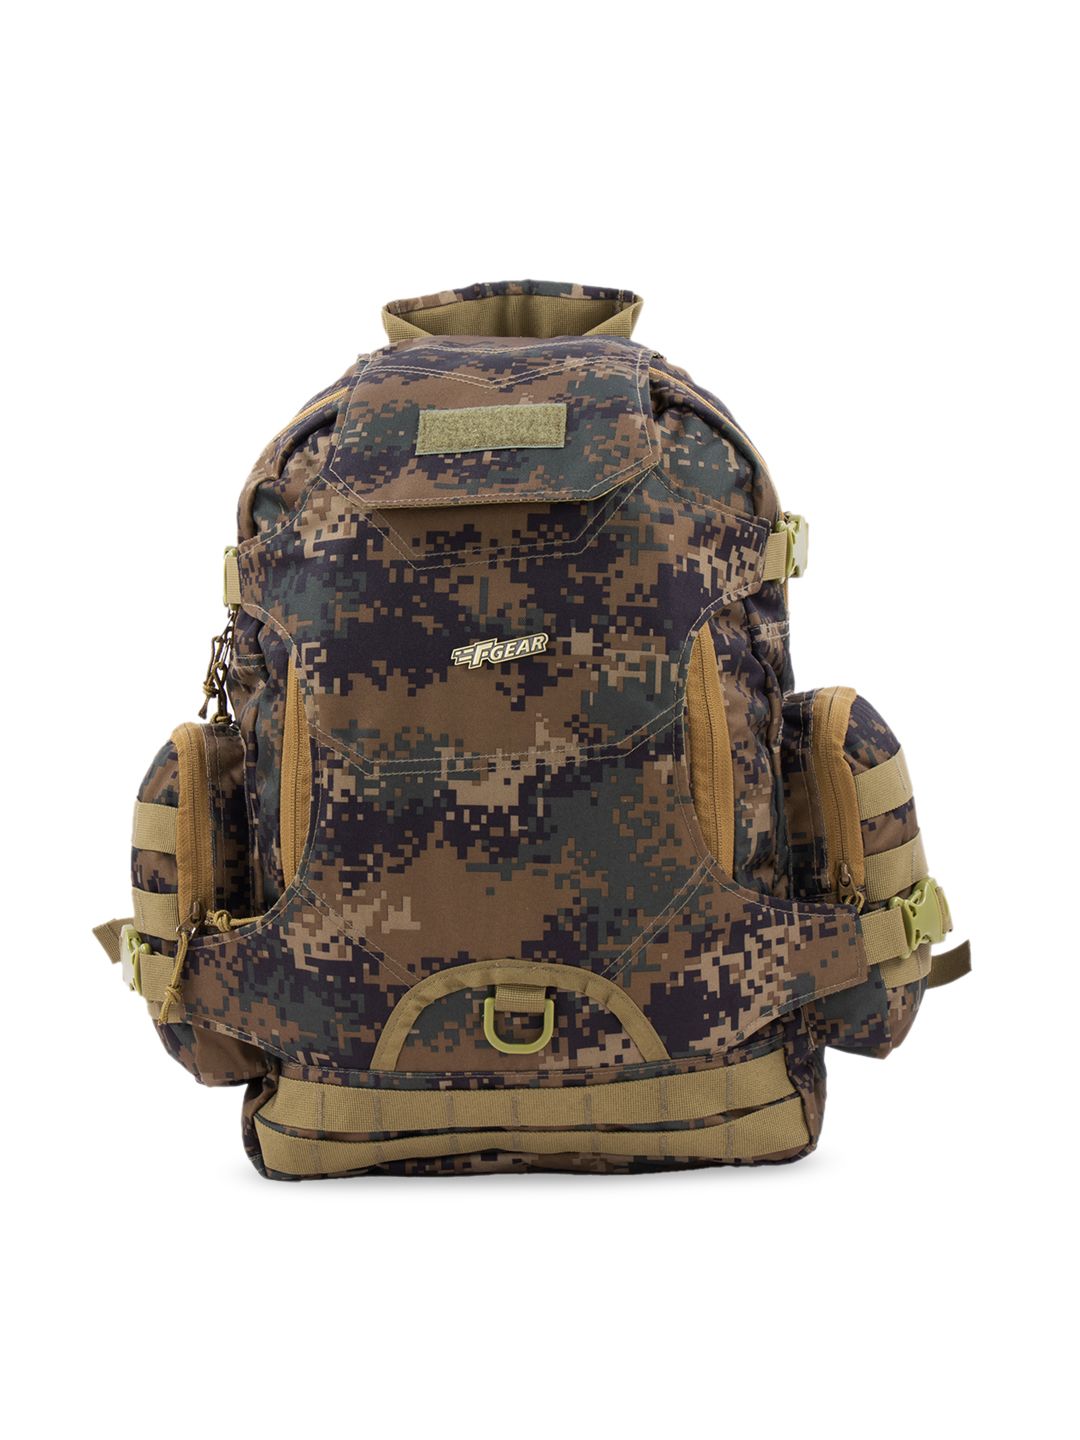 F Gear Unisex Green Graphic Military Ambush Marpat WL Digital Camo Backpack Price in India